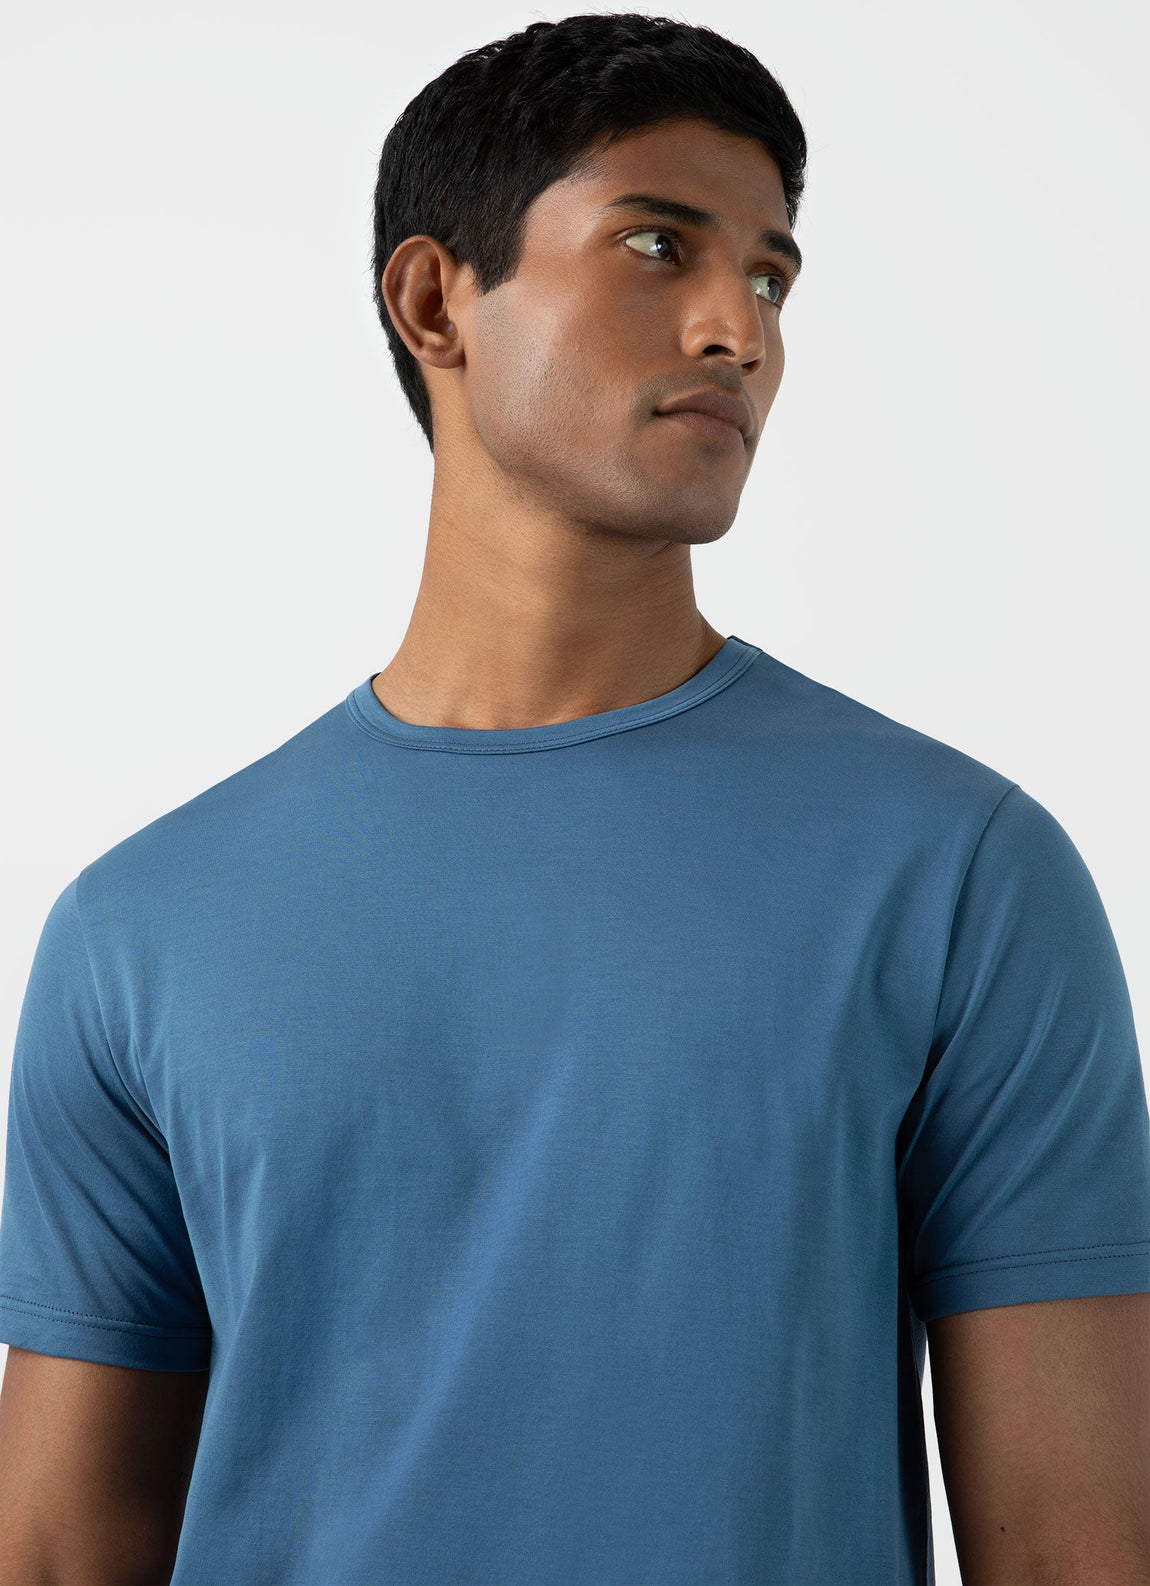 Men's Classic T-shirt in Steel Blue